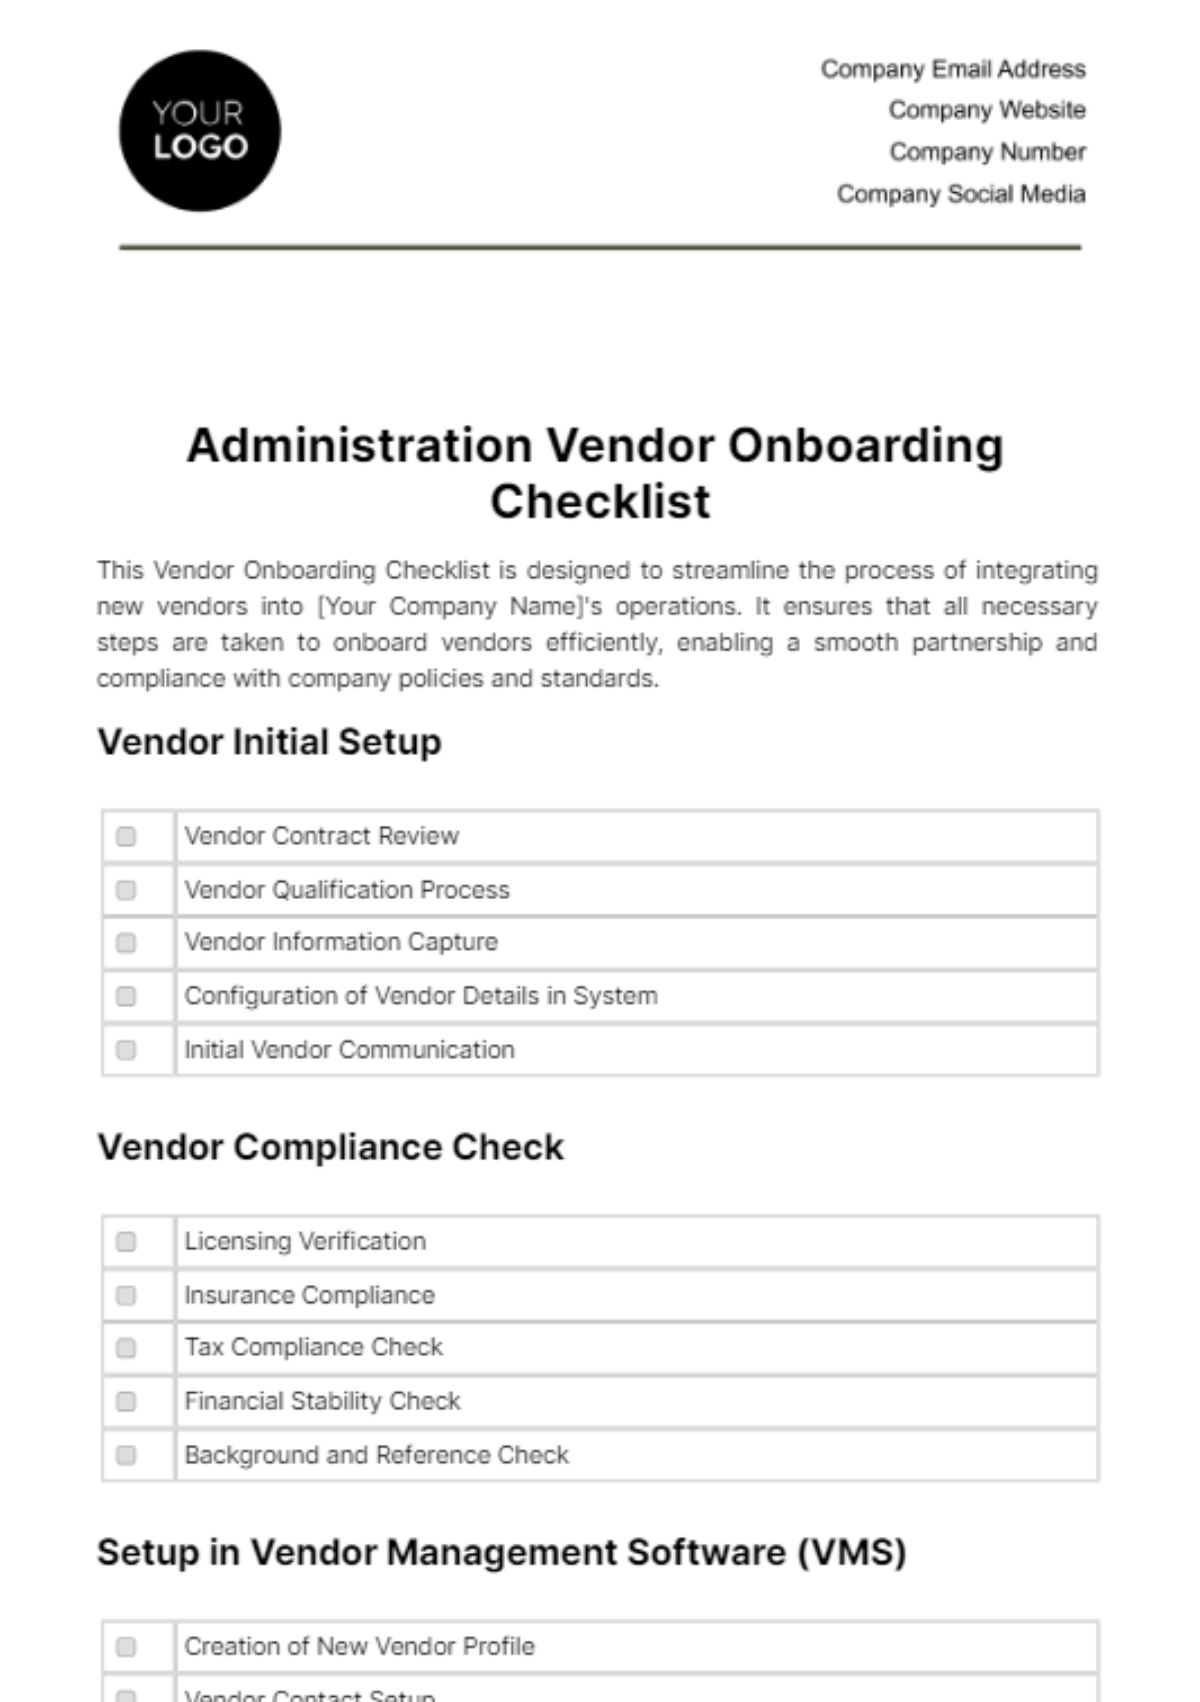 Administration Vendor Onboarding Checklist Template